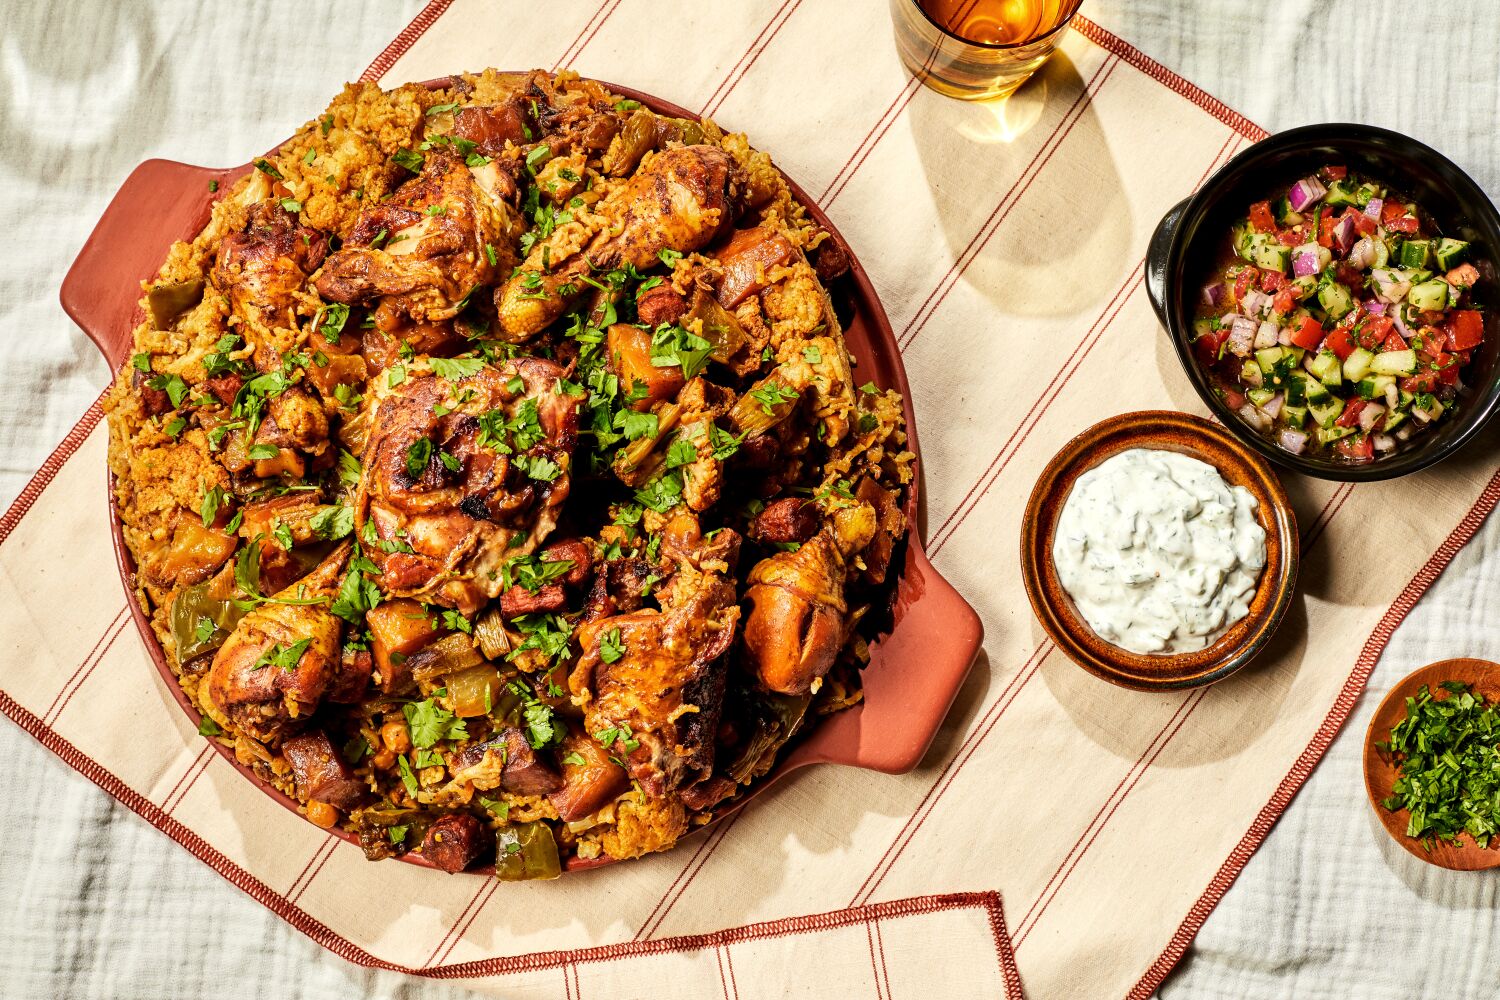 Maqluba (Palestinian Upside-down Chicken and Rice)